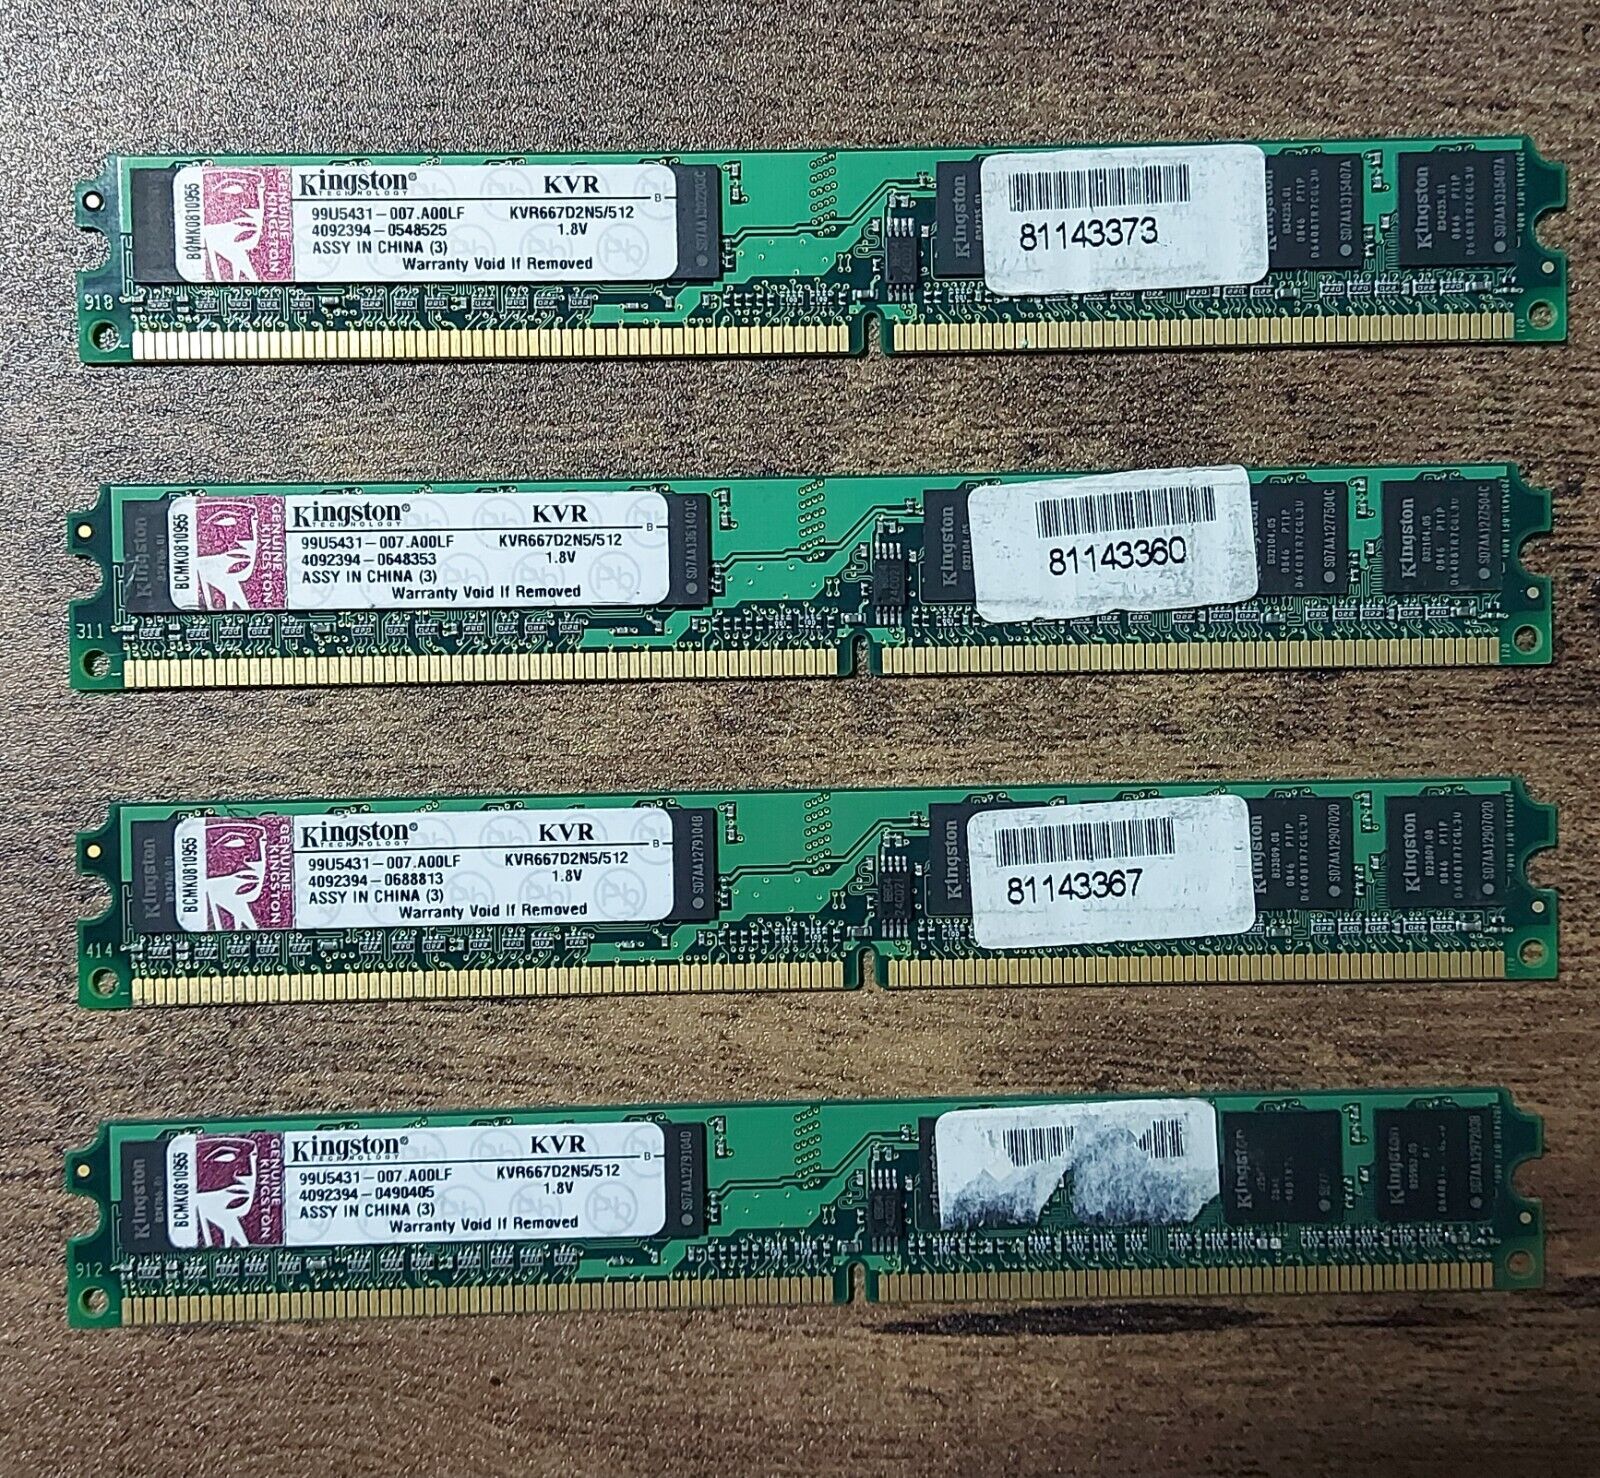 Lot of 4 Memory Sticks of 512MB for Desktop Memory - KVR667D2N5/512_4